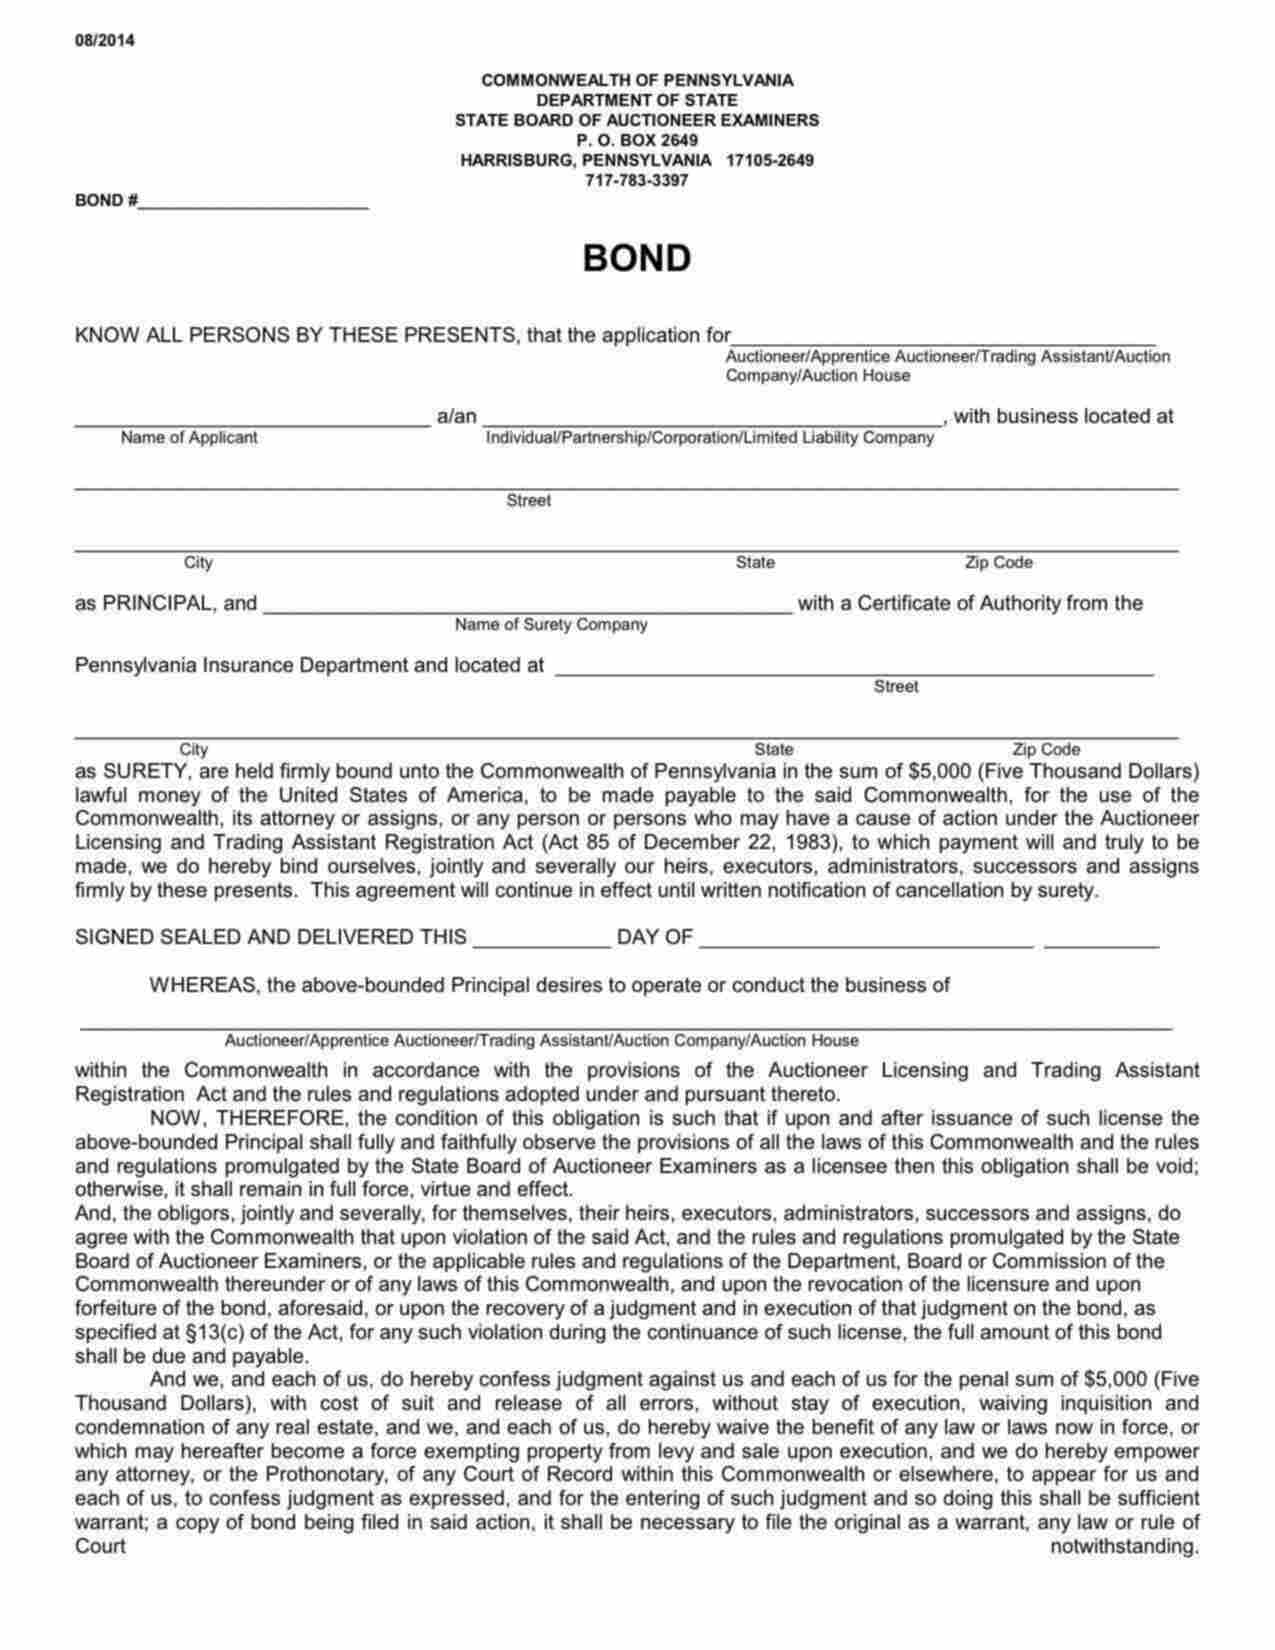 Pennsylvania Auction Company Bond Form